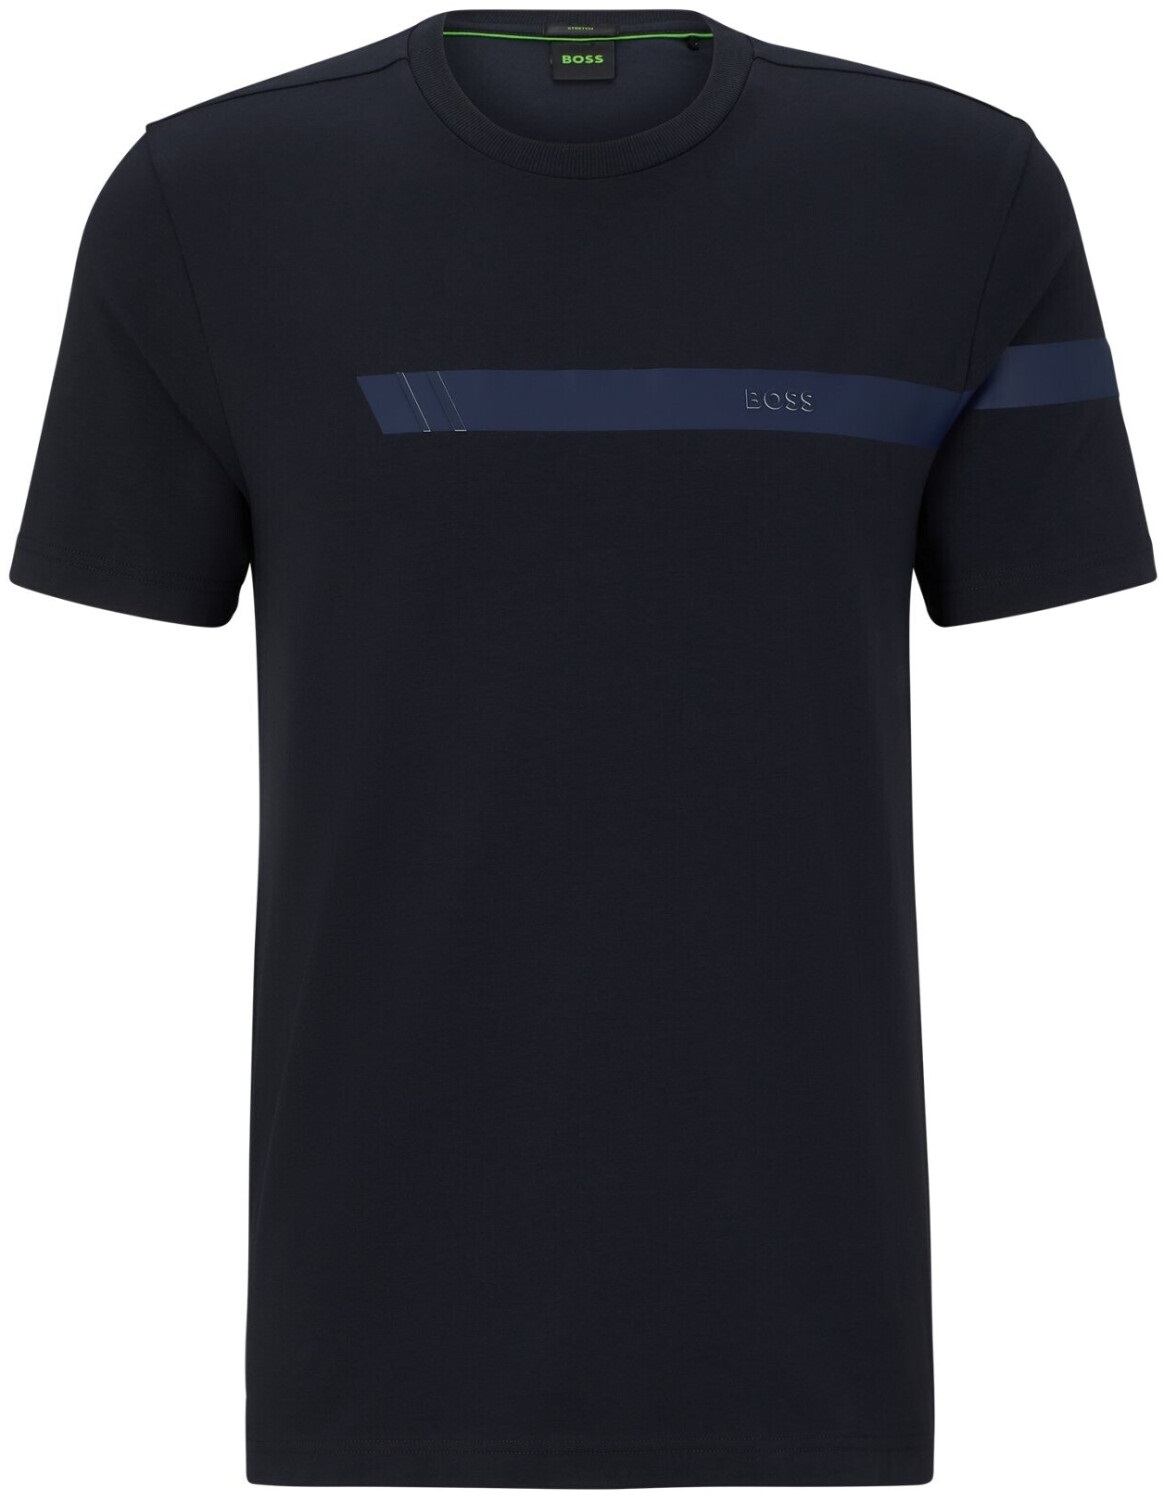 Hugo Boss Tee 2 T-Shirt - Tramps the Store